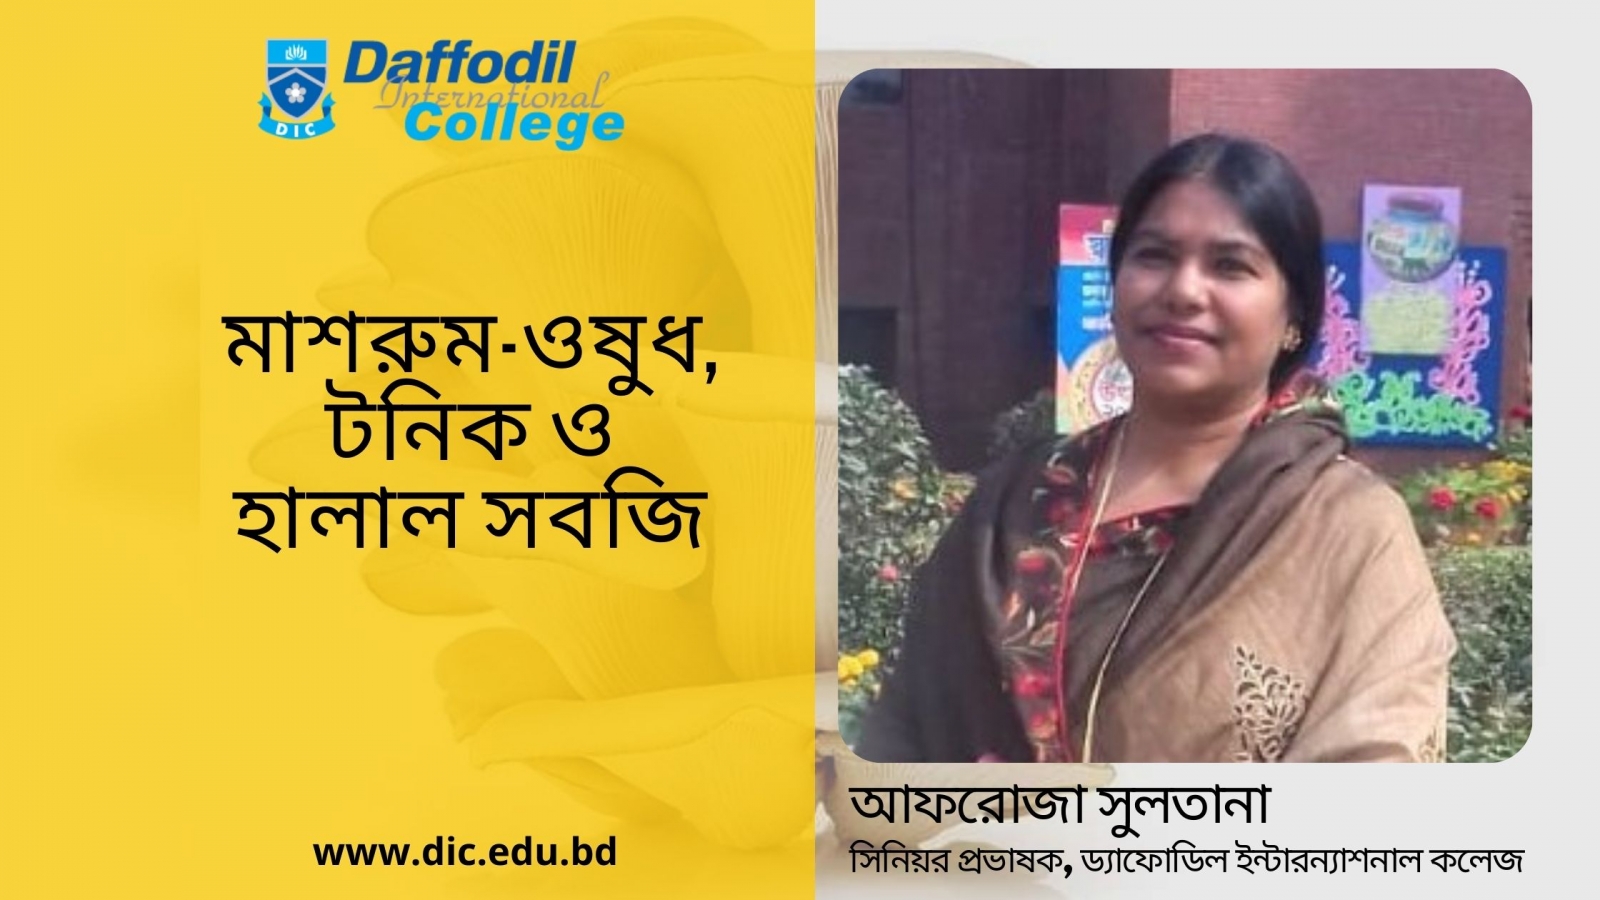 Daffodil International College Blog(Afroza Sultana)